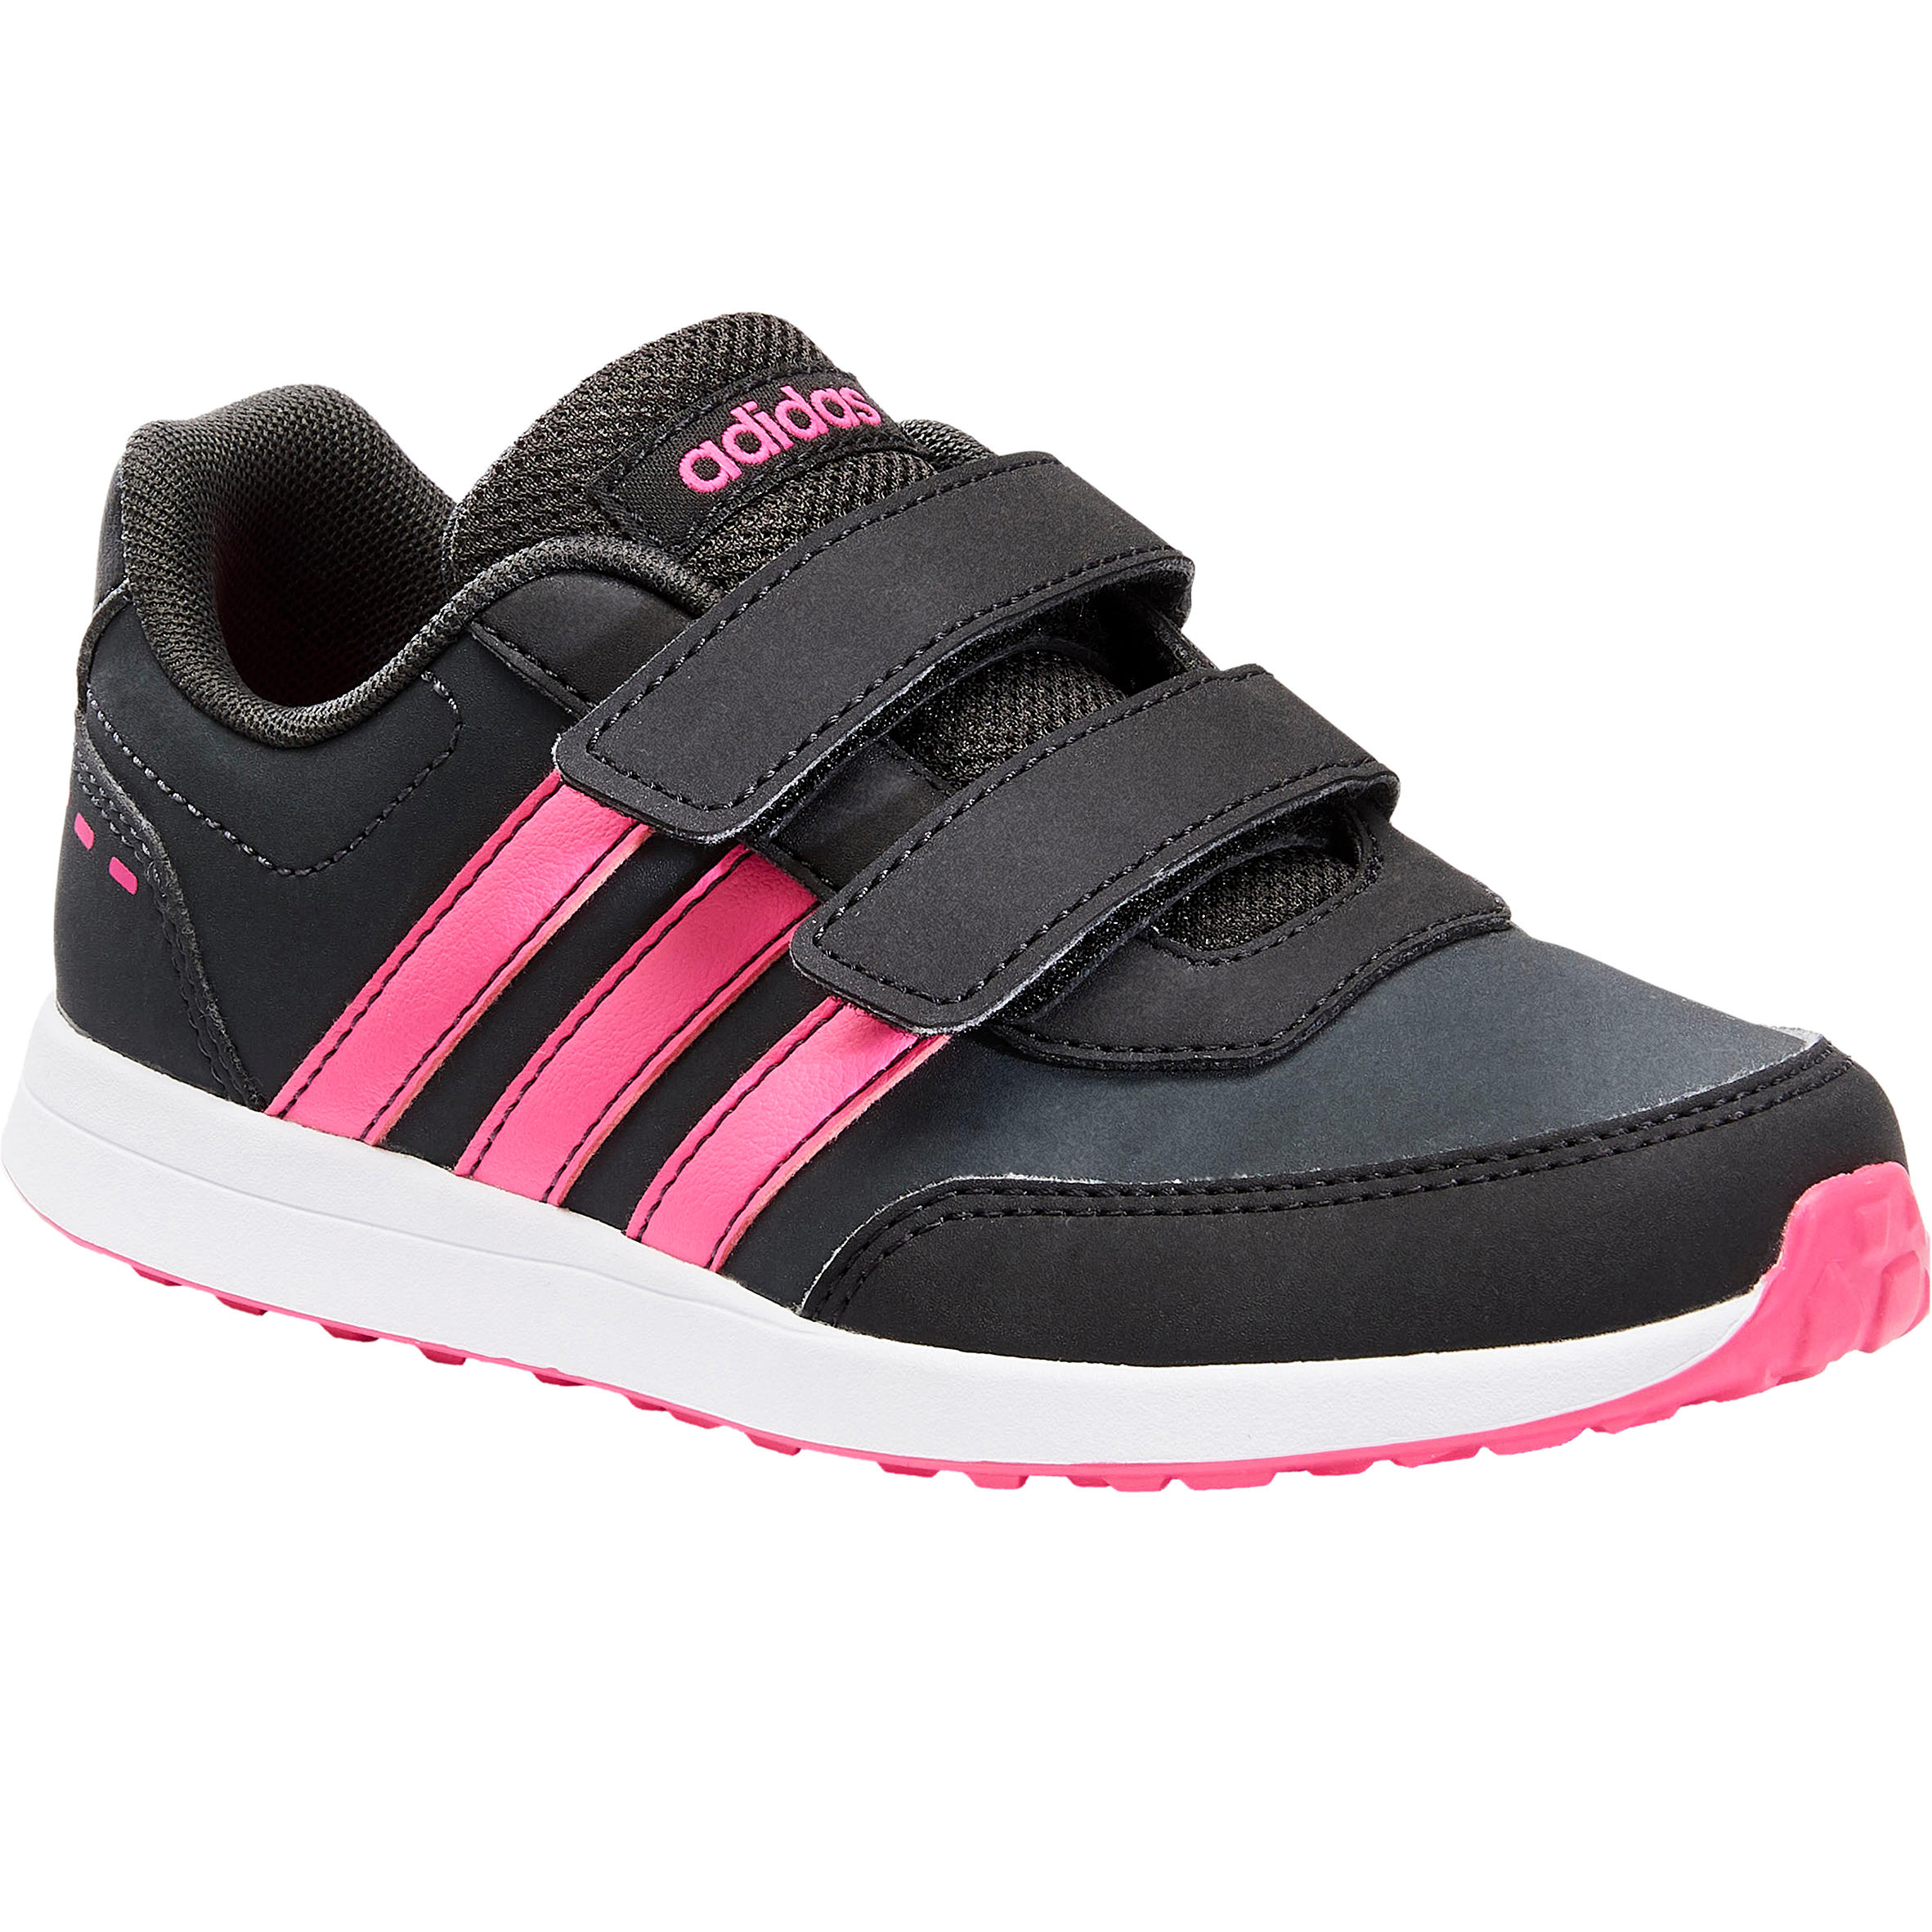 Chaussures marche enfant Adidas Switch gris / rose scratch Adidas 